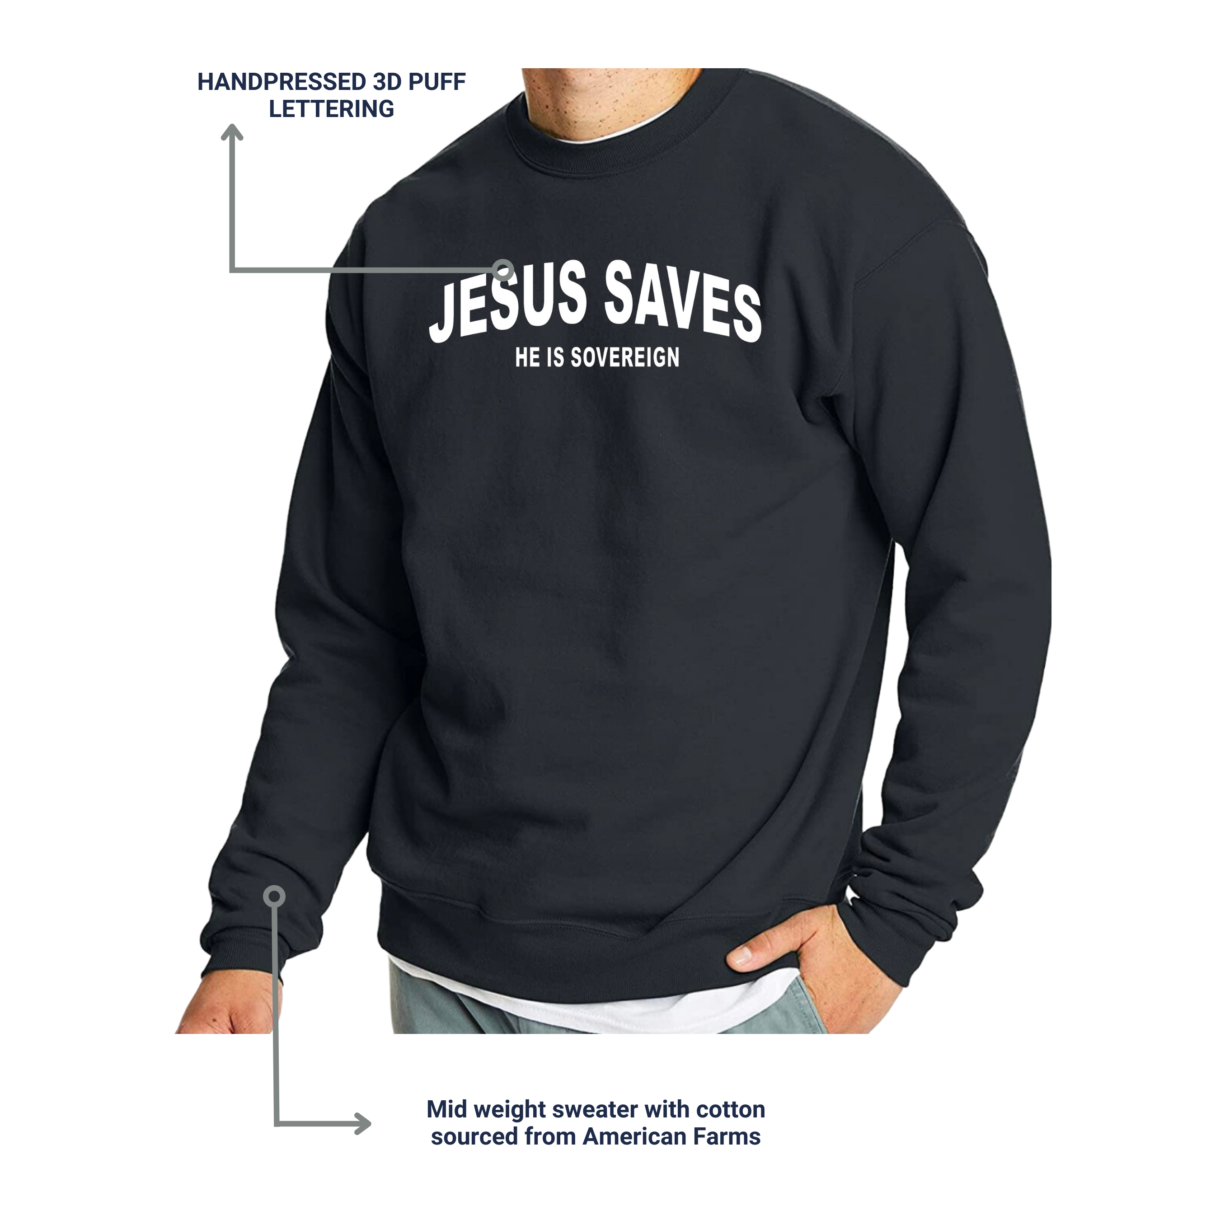 JESUS SAVES CREWNECK